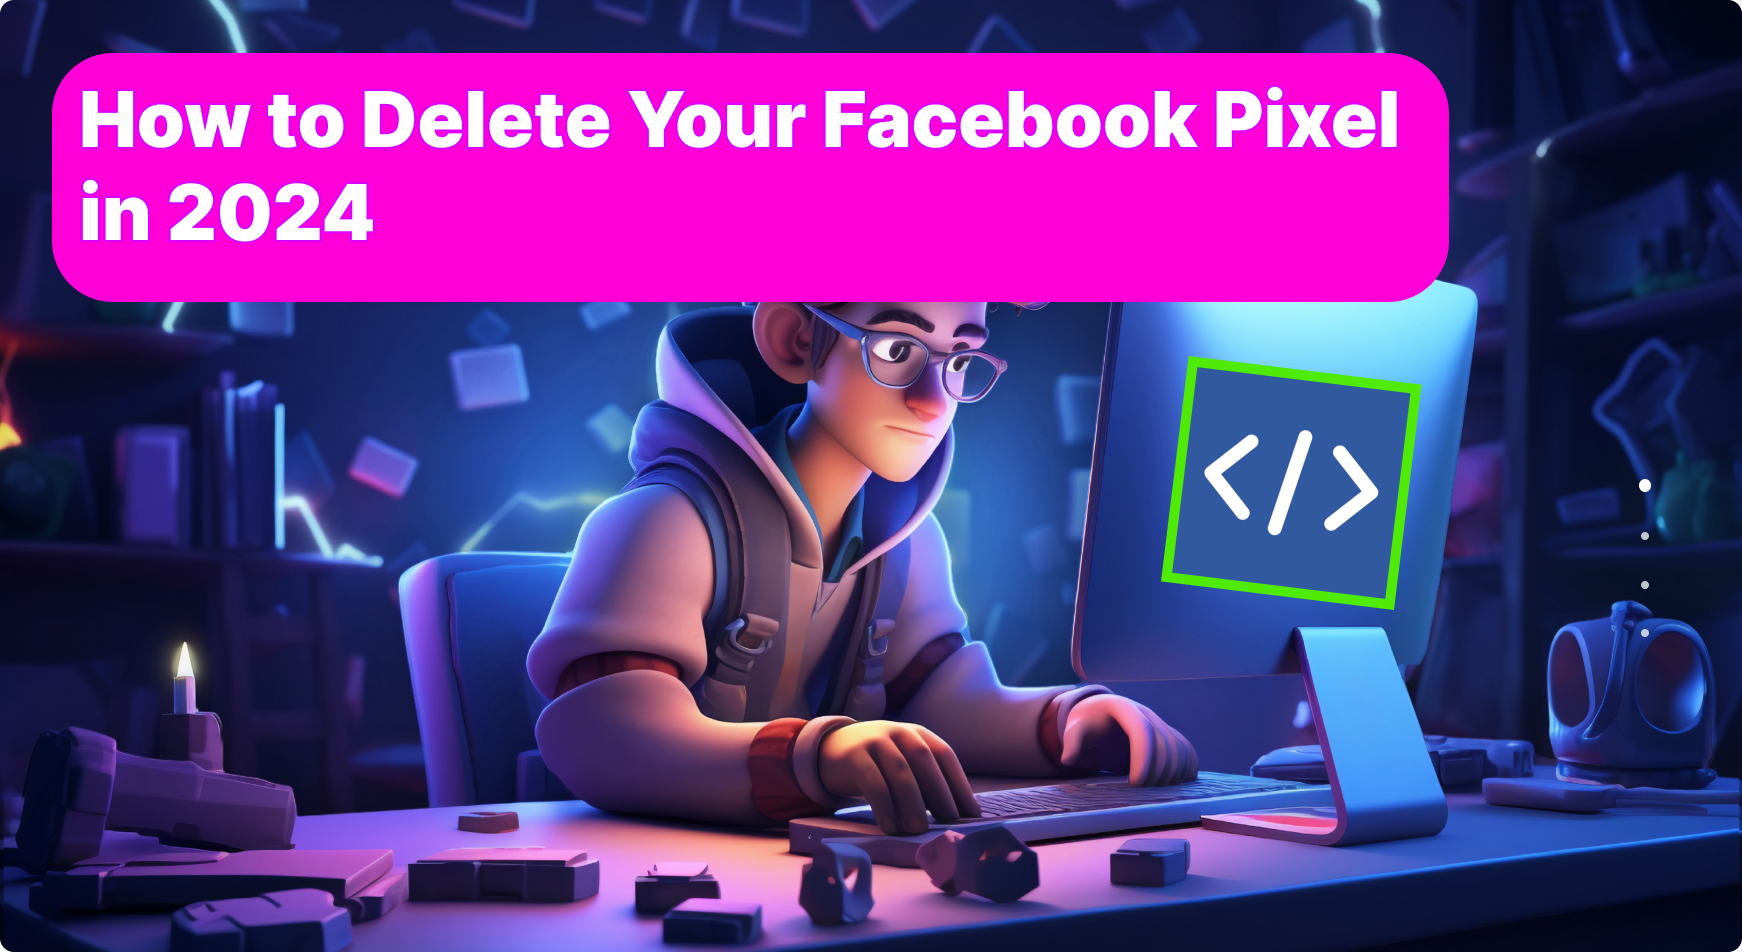 How to Delete Your Facebook Pixel in 2024